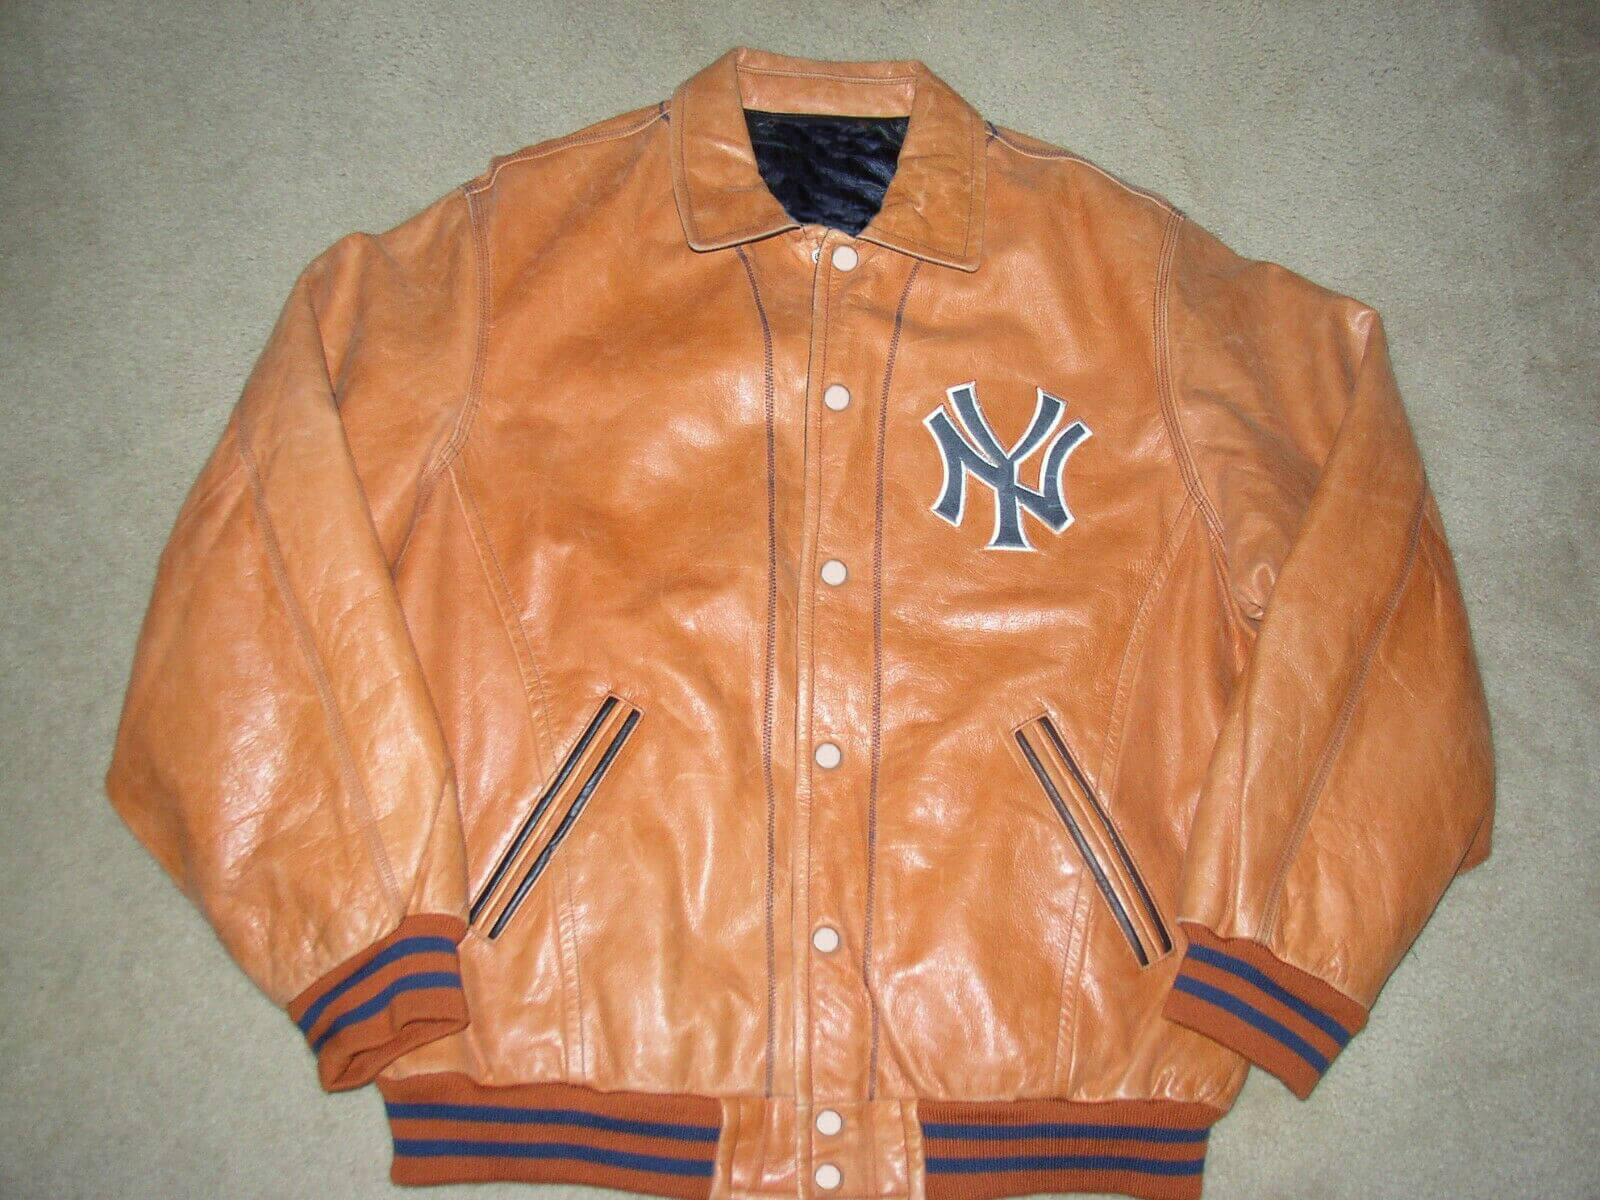 Vintage 1990's Mirage New York Yankees Leather Jacket - Maker of